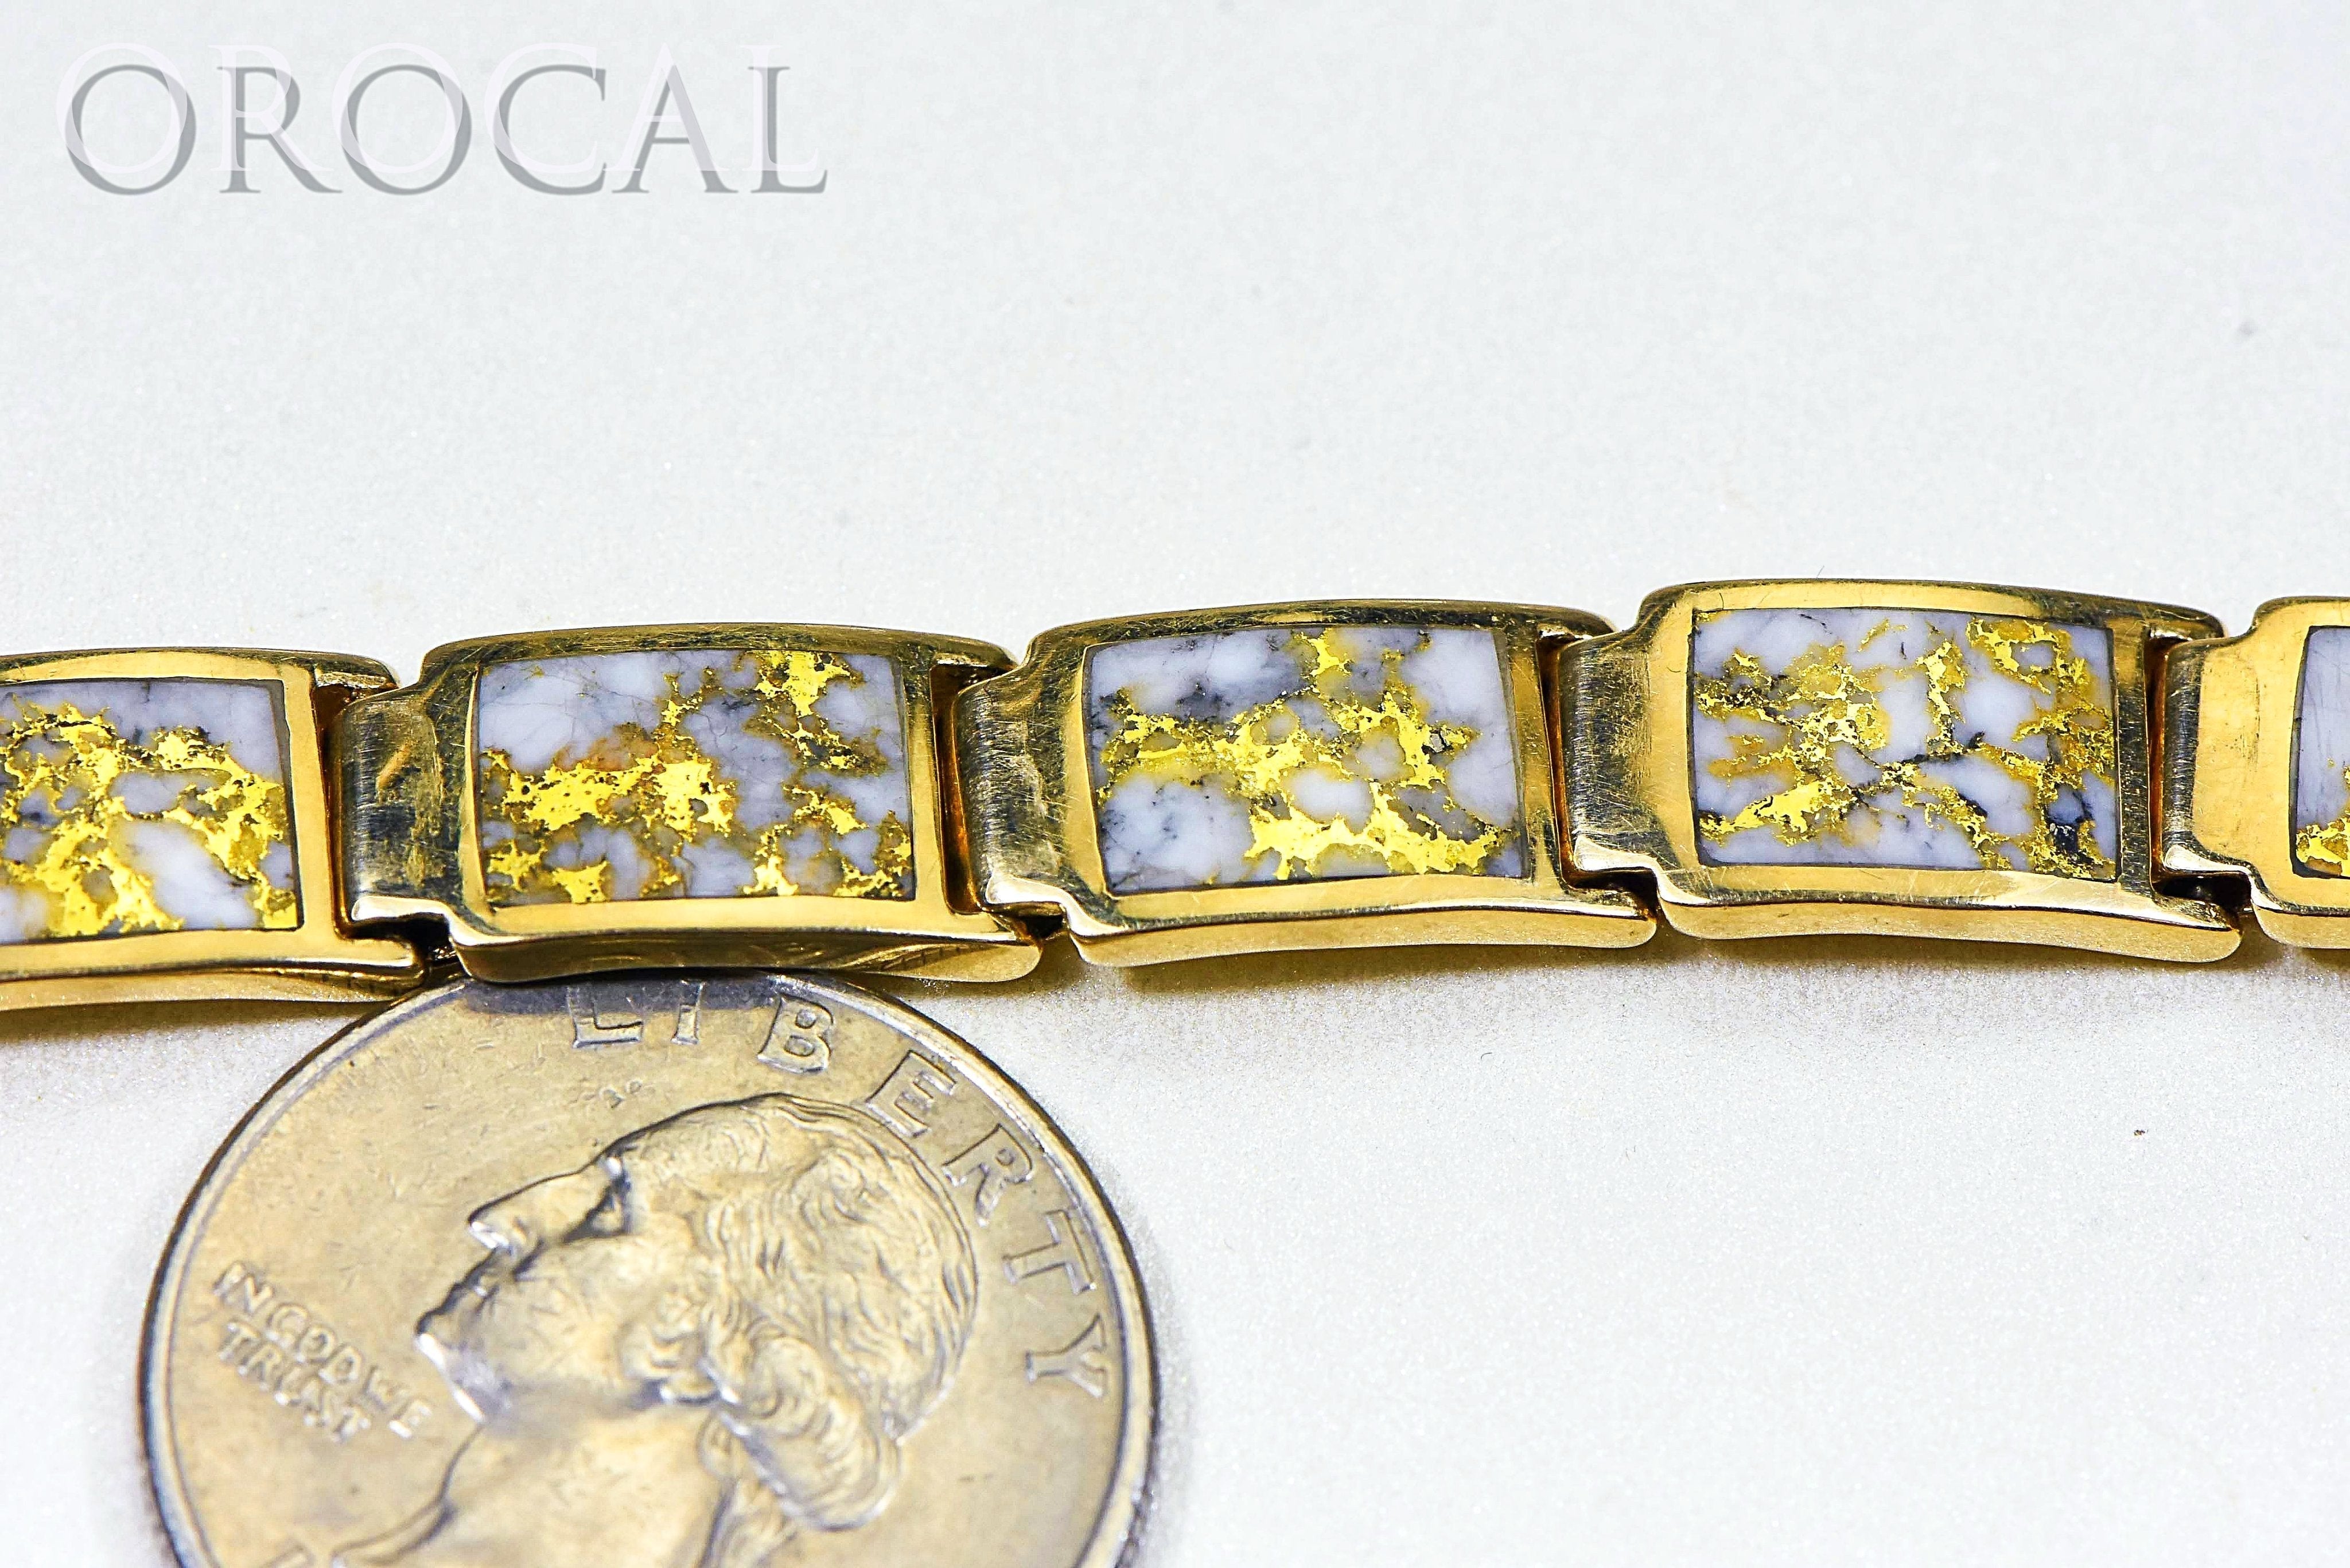 Gold Quartz Bracelet "Orocal" B9.5MMH11LQ Genuine Hand Crafted Jewelry - 14K Gold Casting